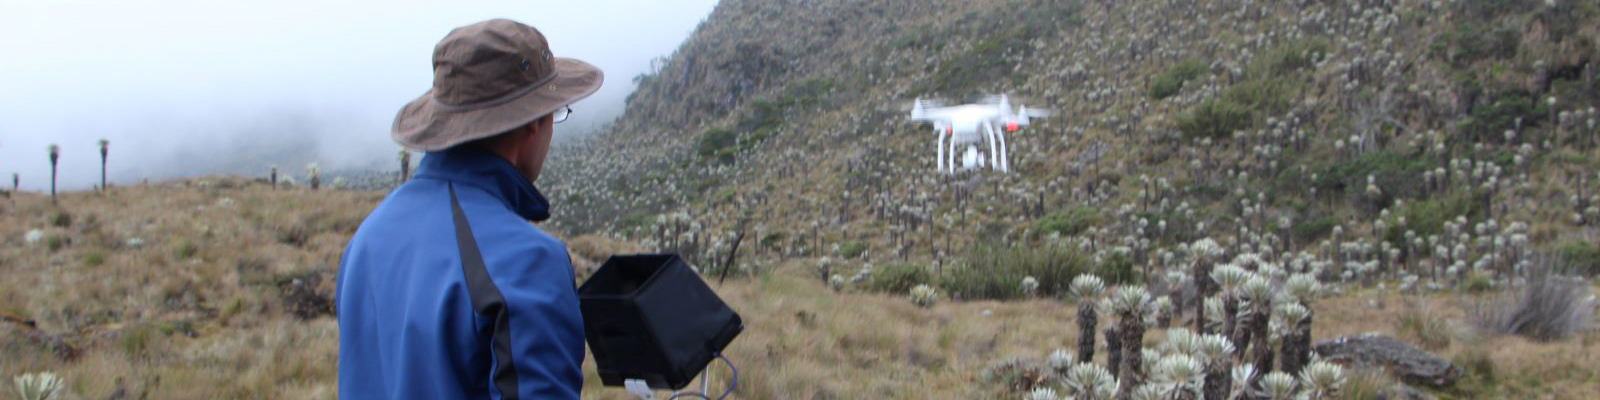 A man piloting a drone